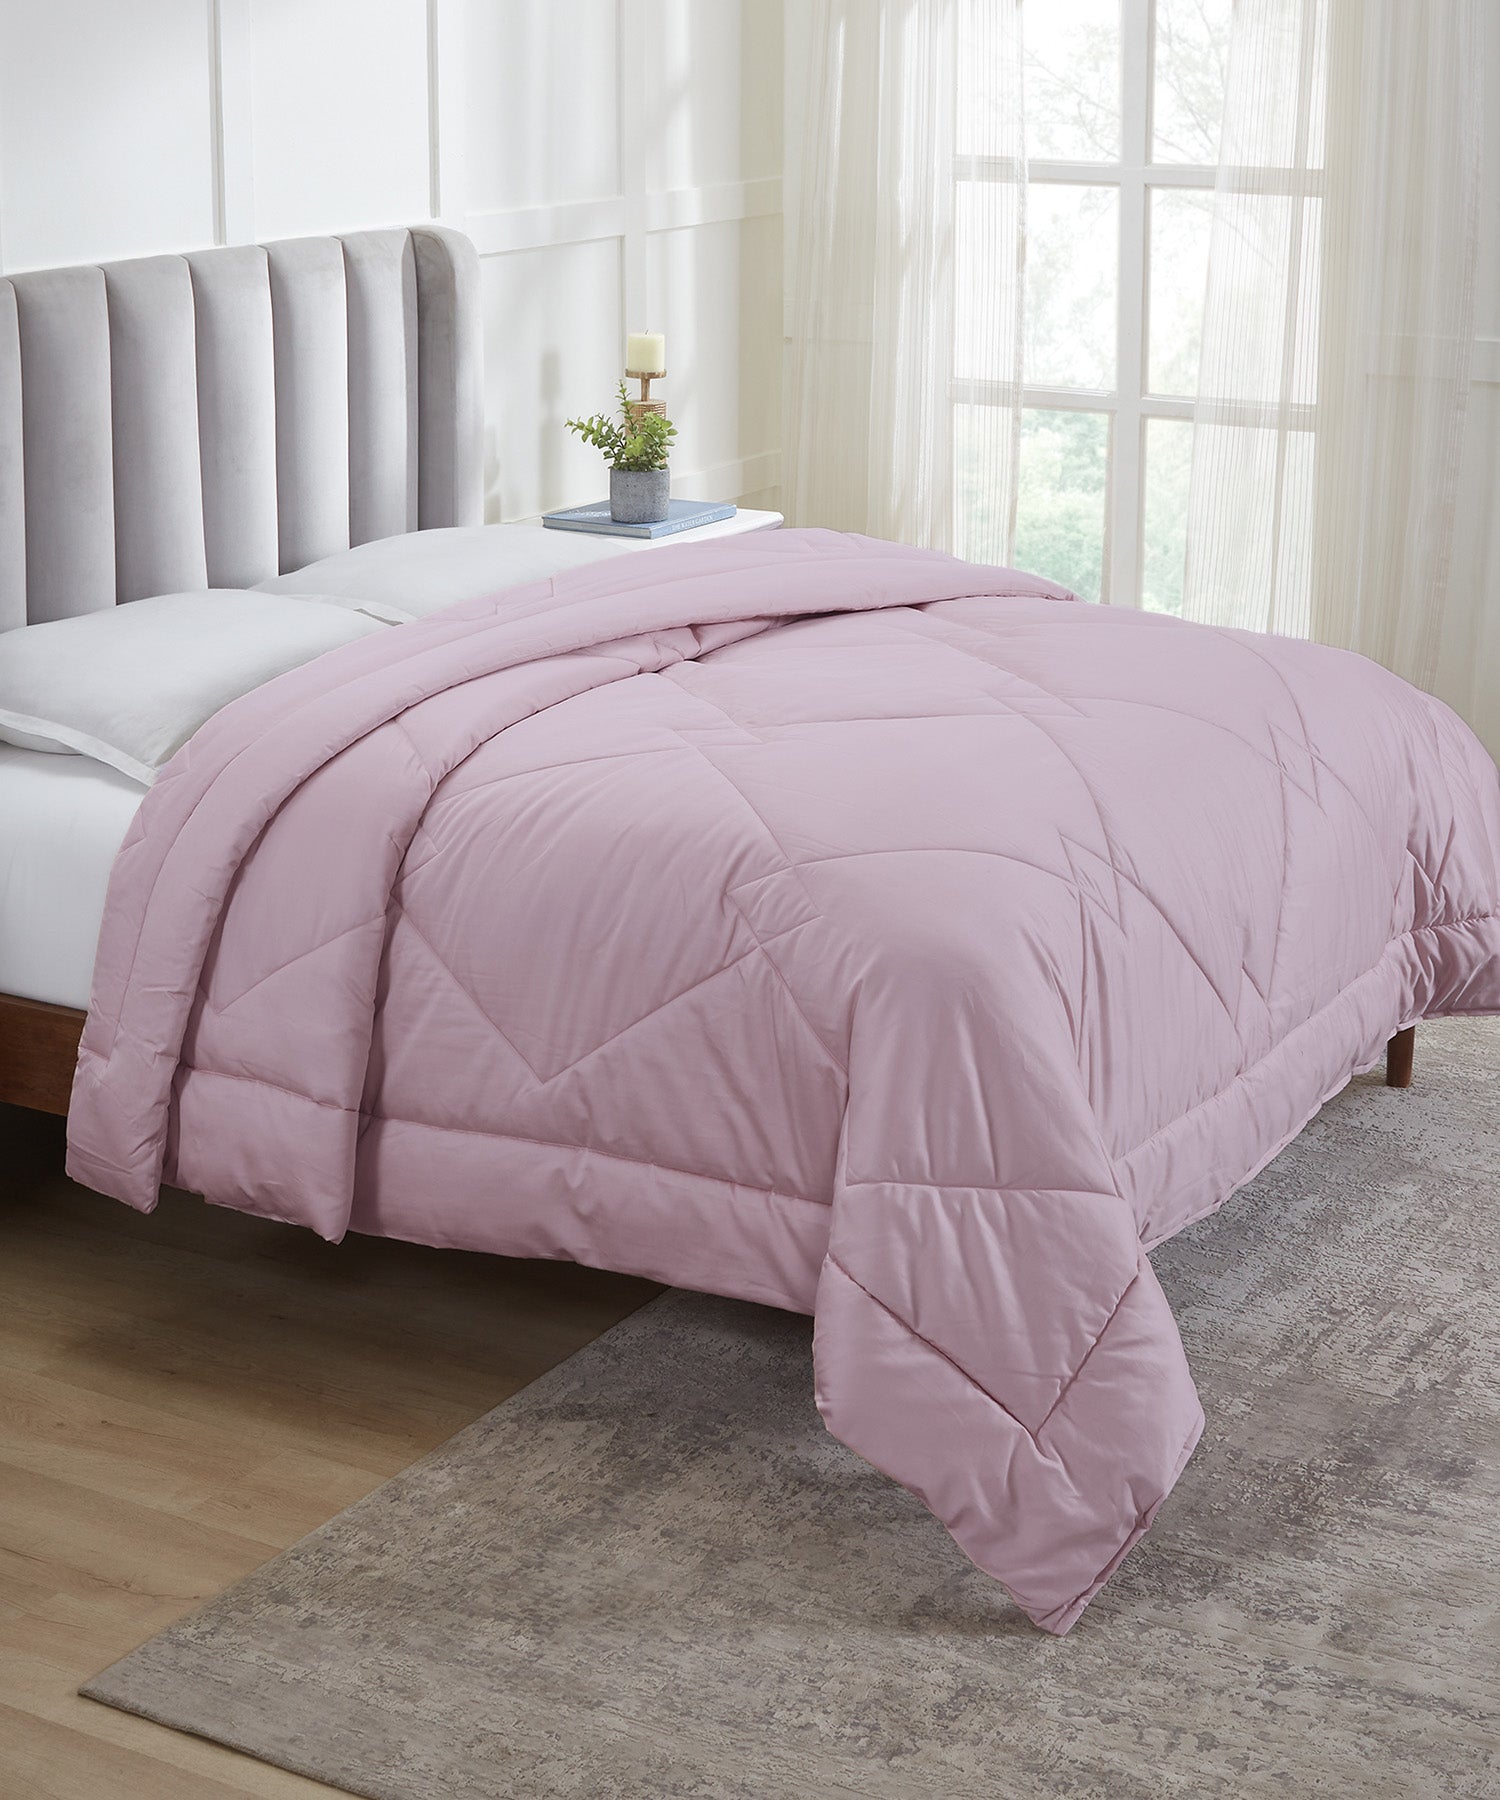 King Comforter ₹7199/-